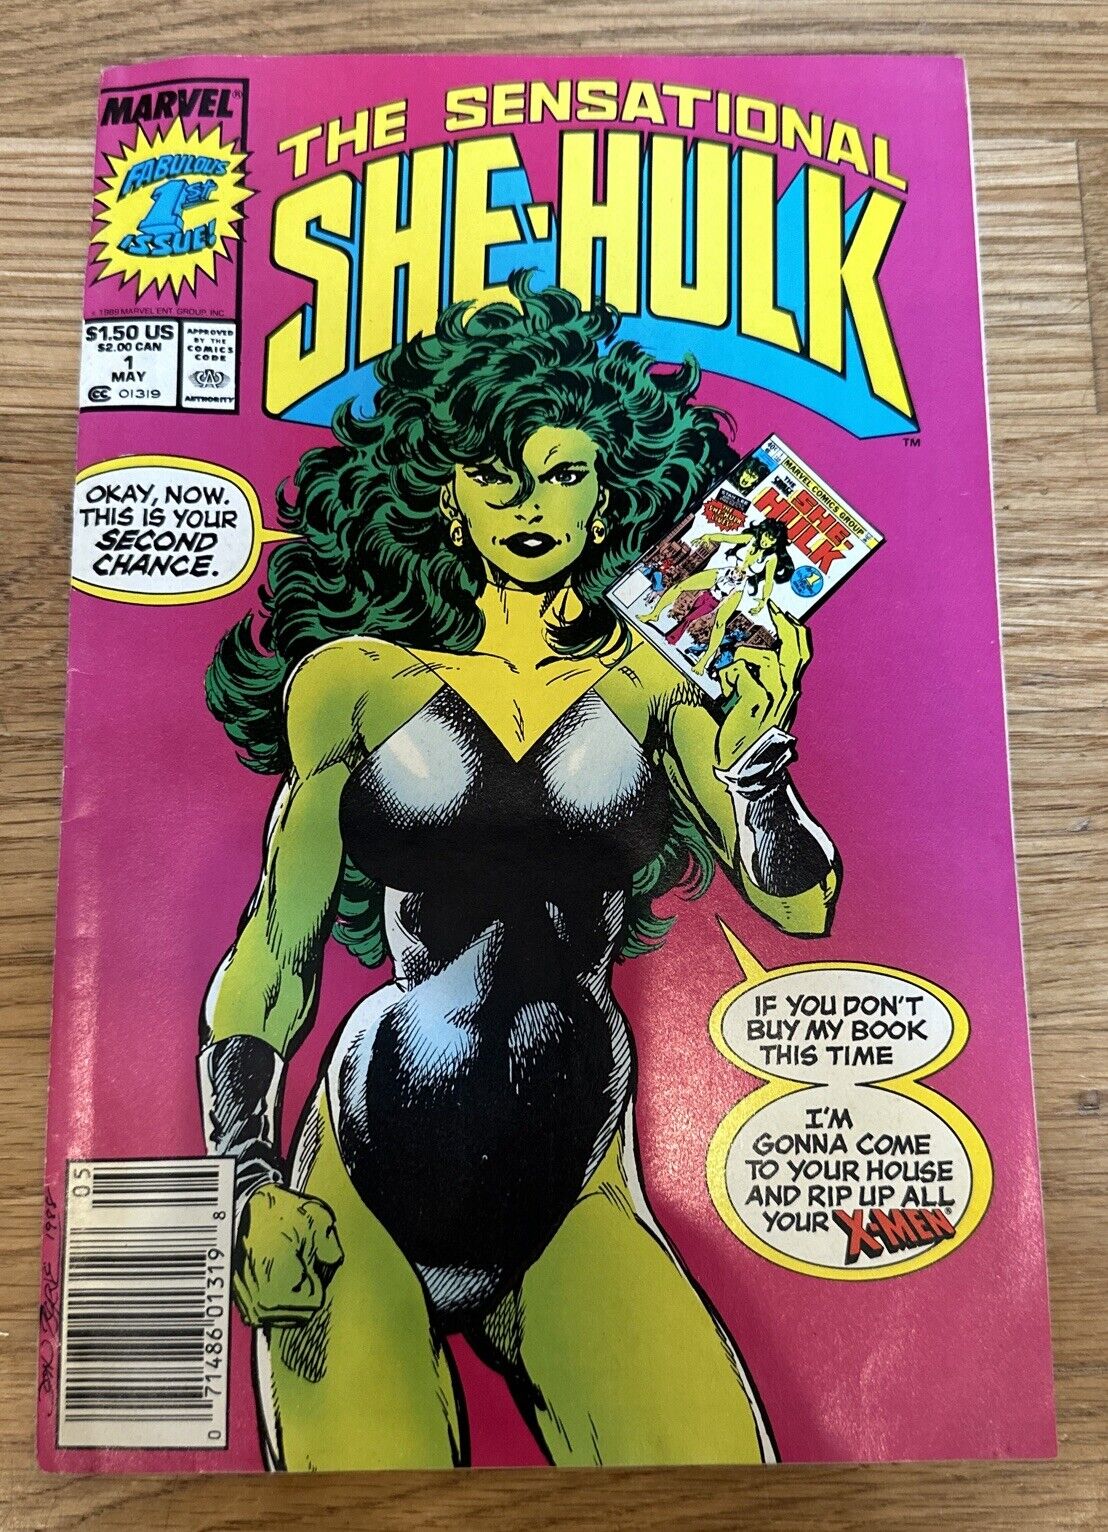 The Sensational She-Hulk #1 (Marvel, May 1989) - Check Description